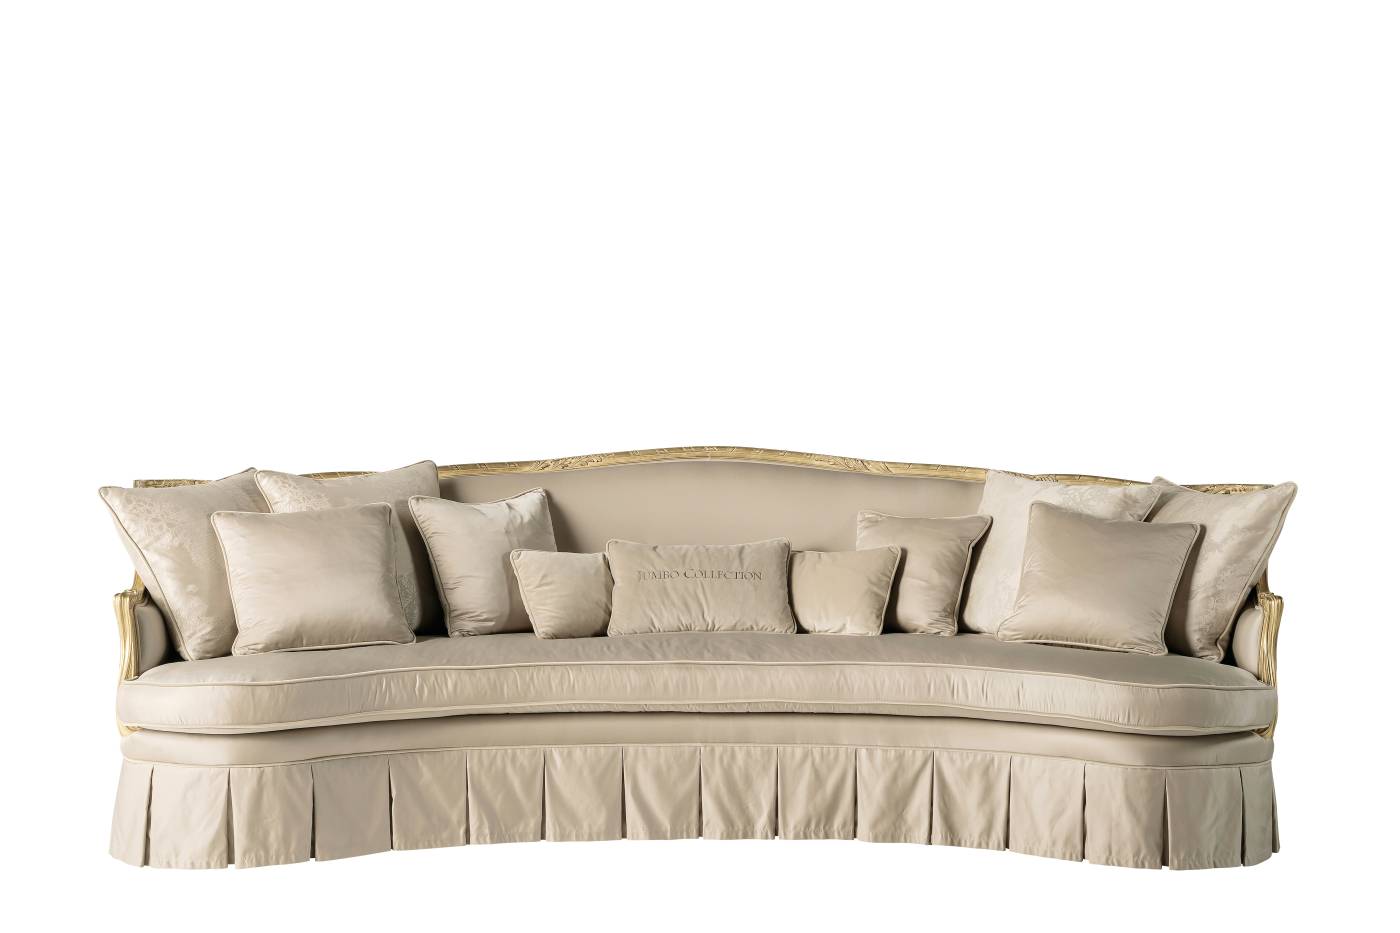 EGLANTINE 3-seater sofa - Discover timeless elegance with Jumbo Collection's Italian luxury sofas. 